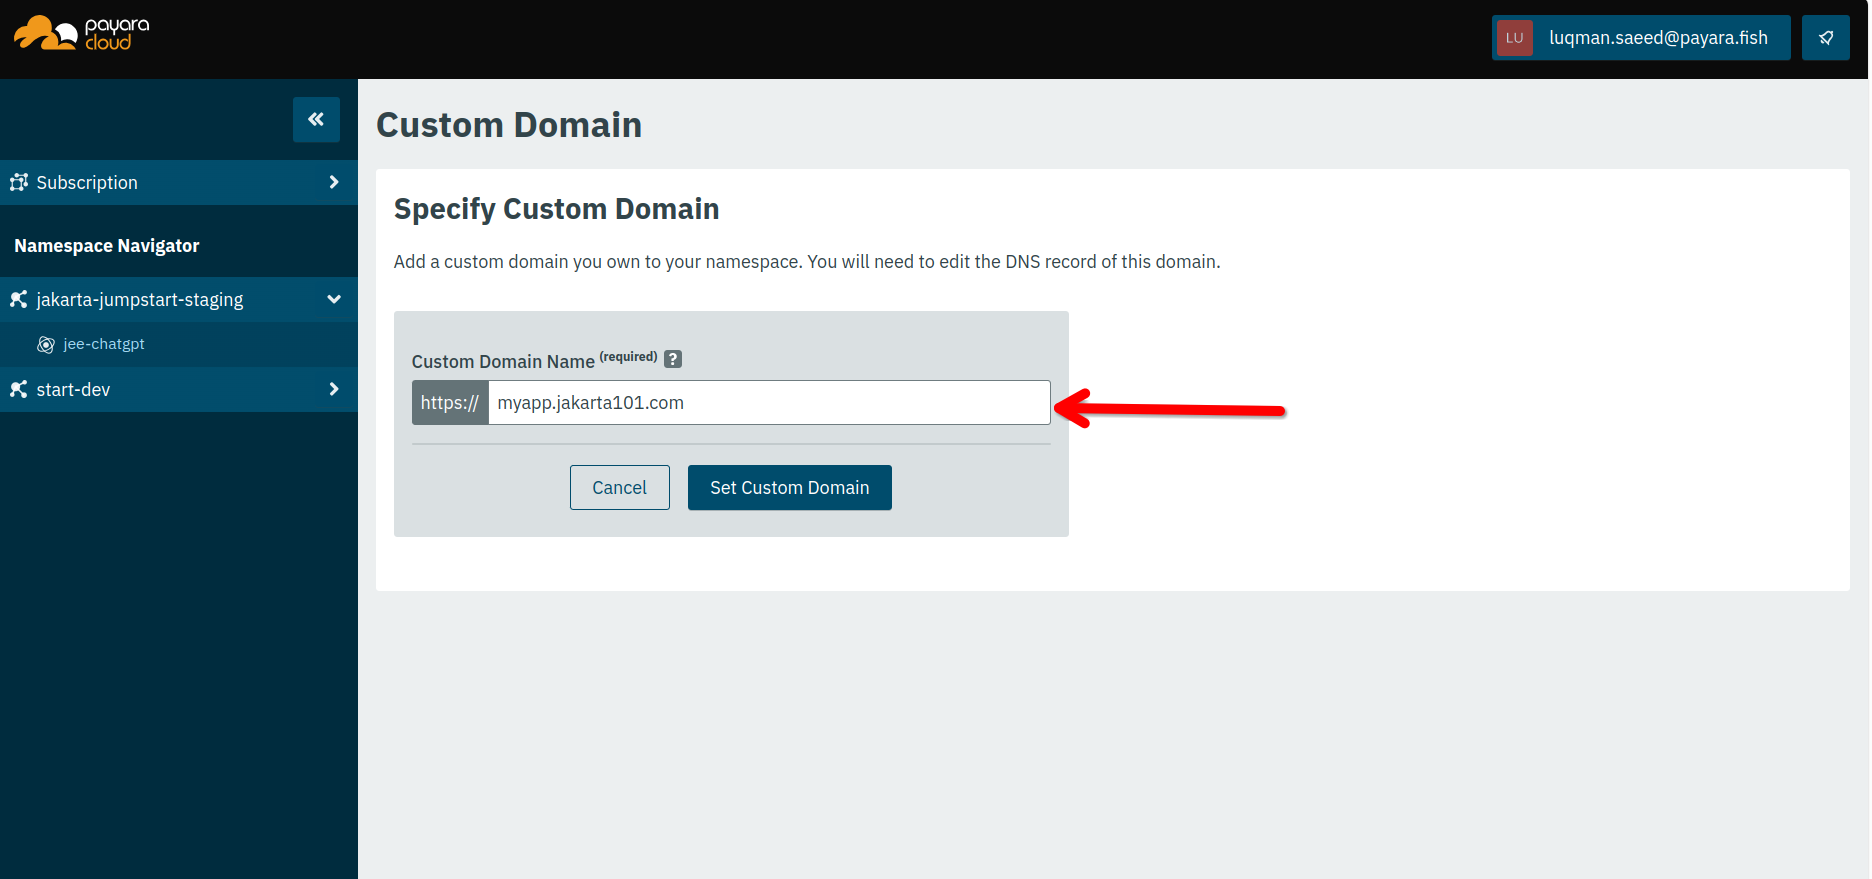 Interface for entering custom domain name